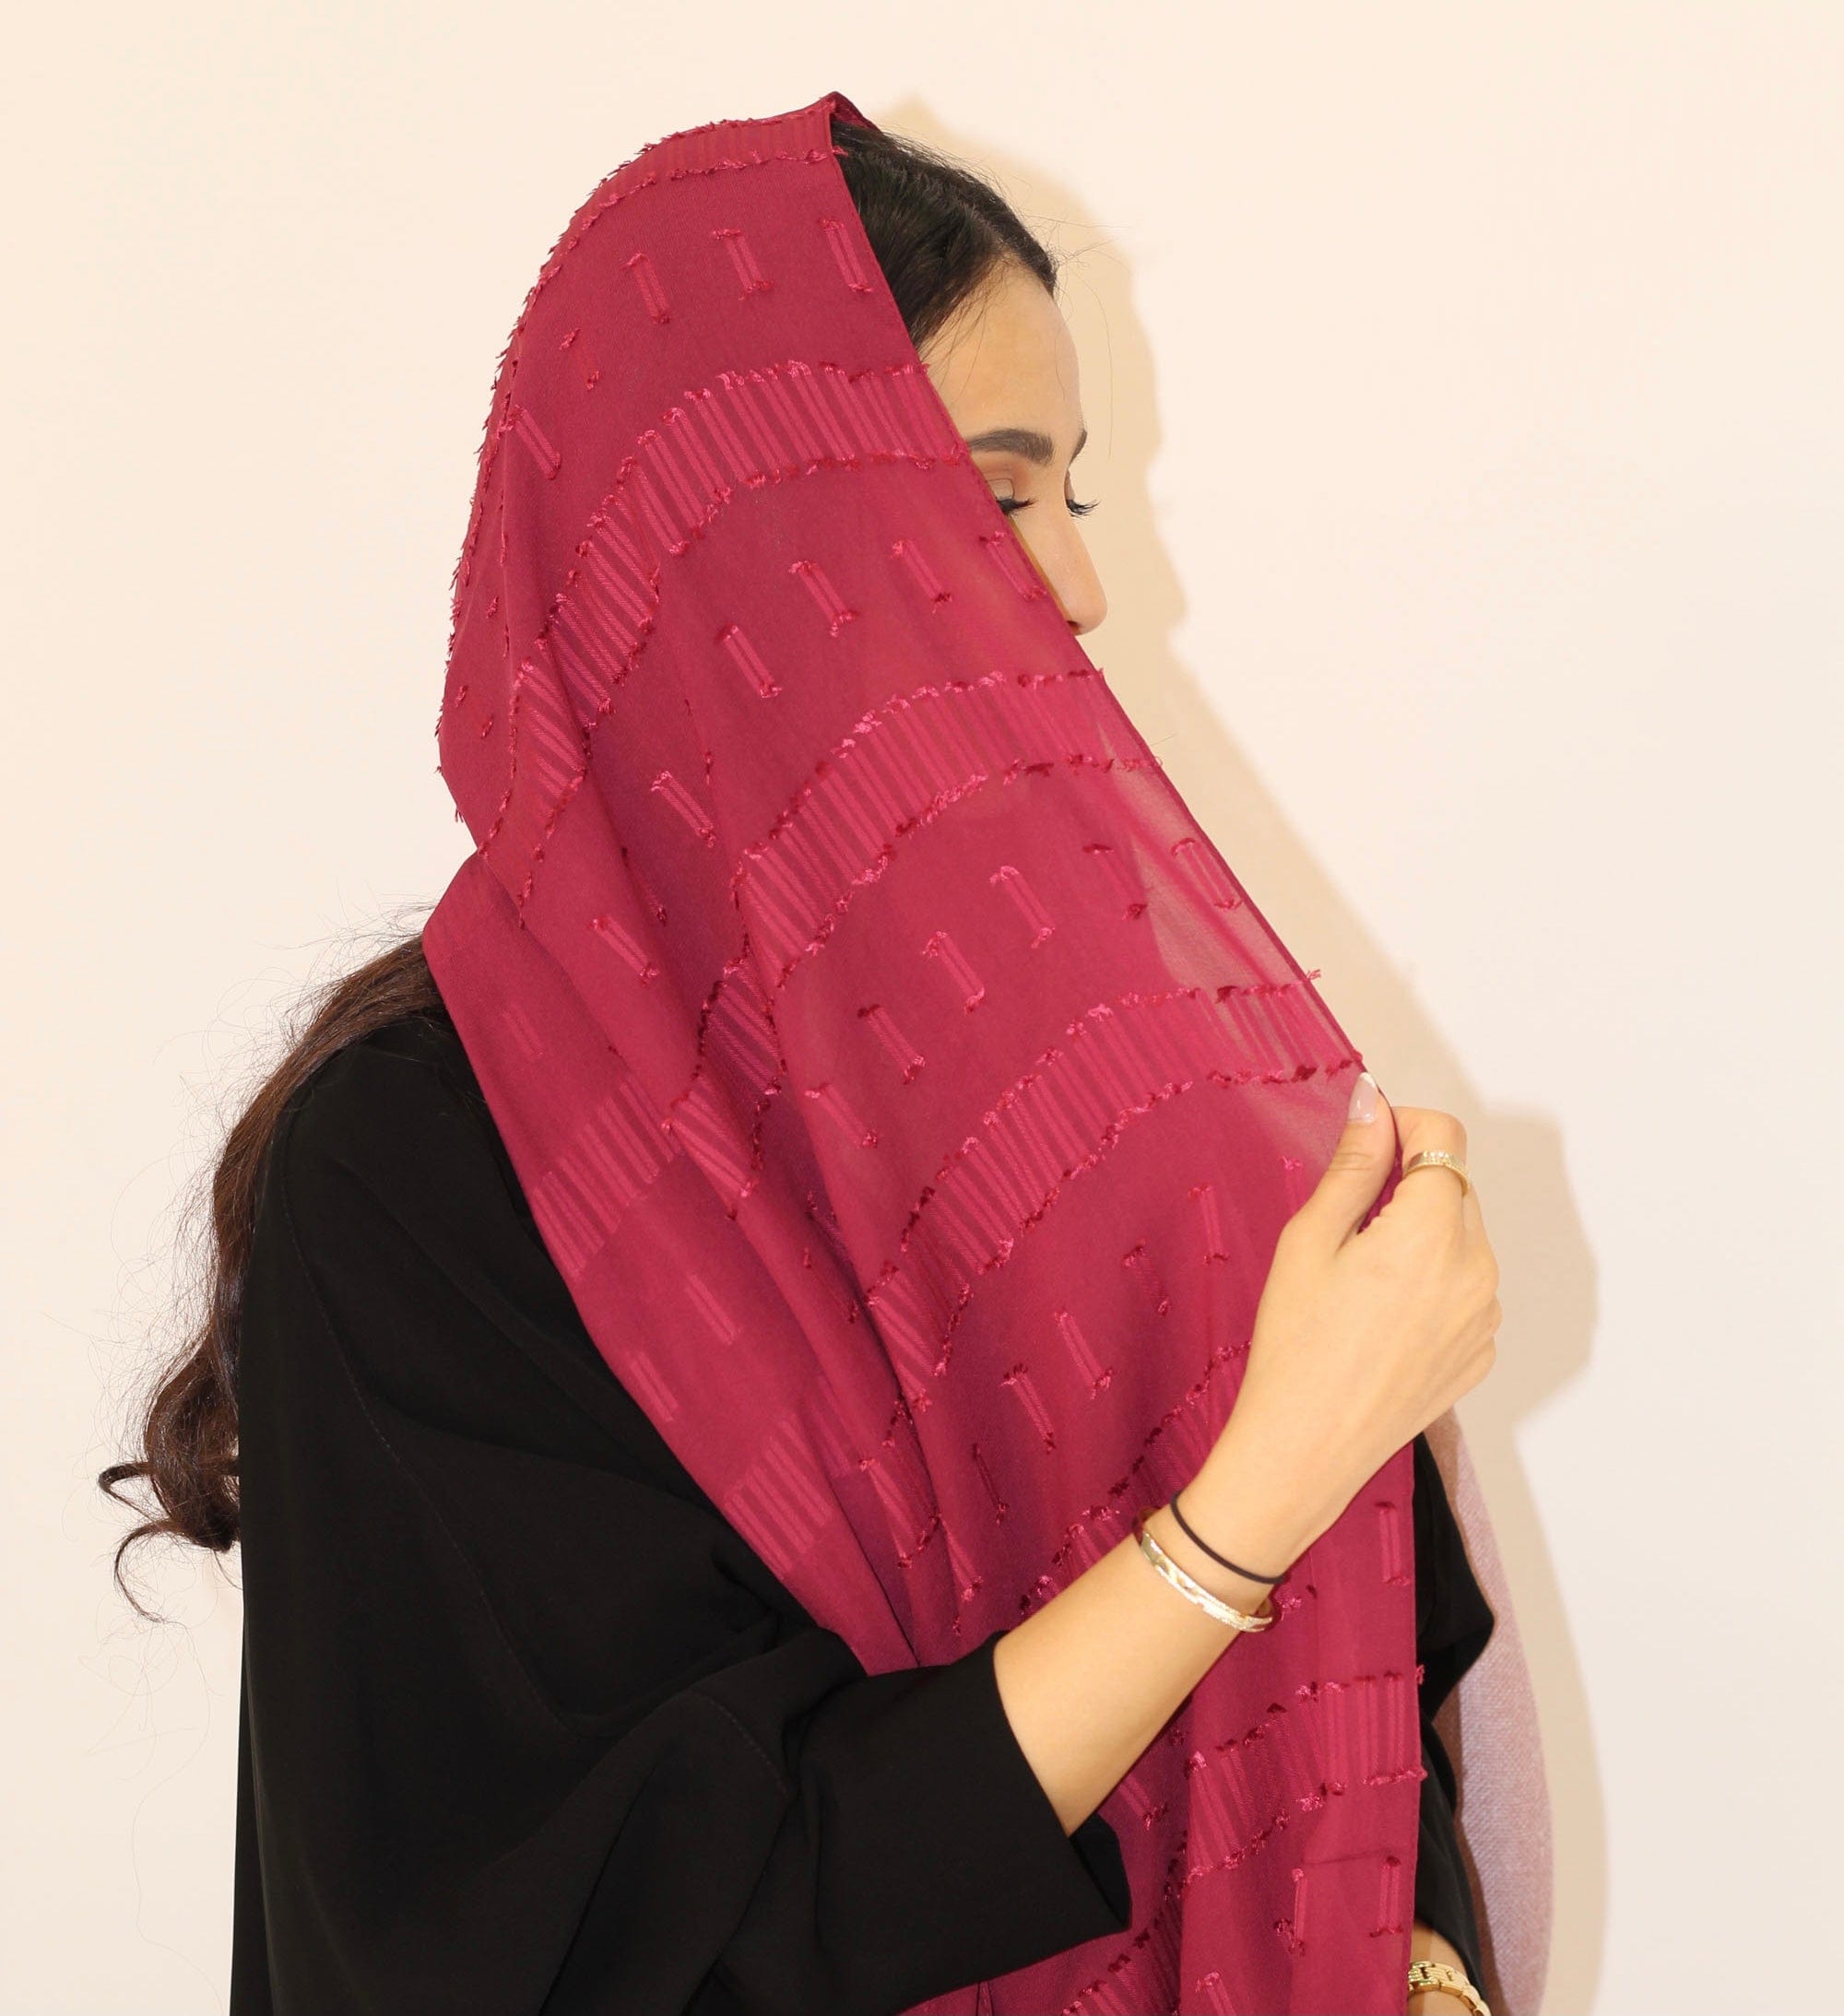 TA-236 hijab in burgundy color